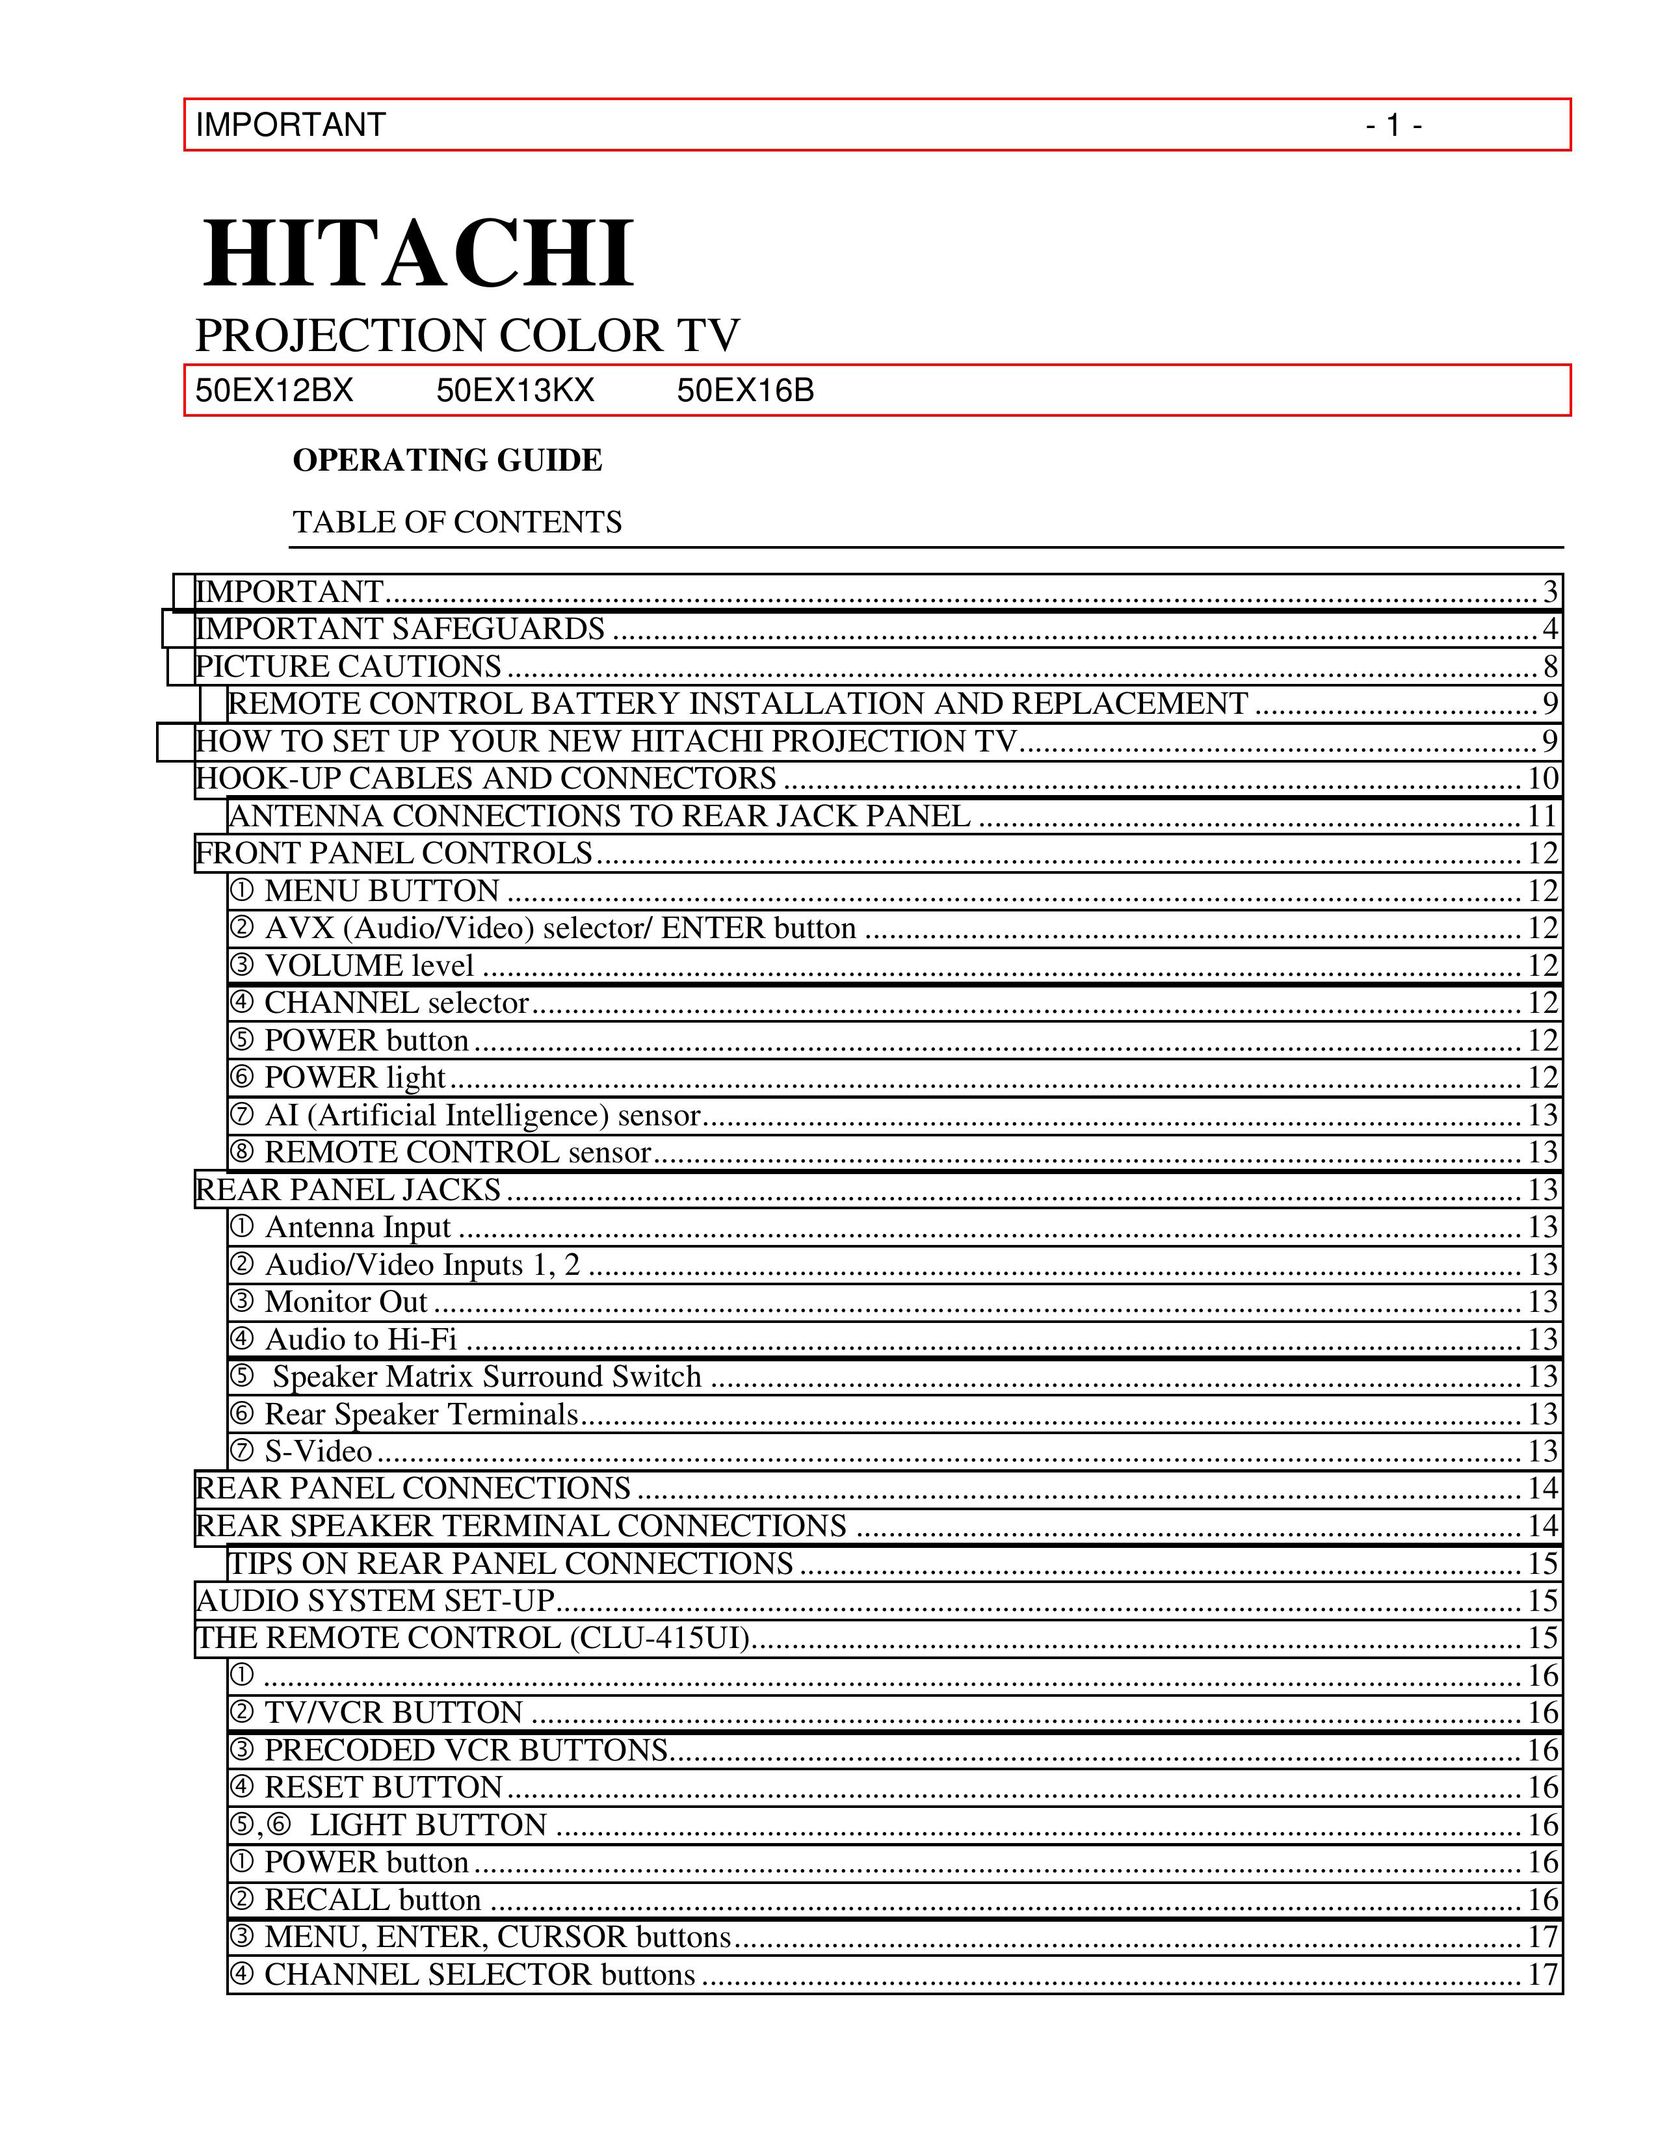 Hitachi 50EX13KX Projection Television User Manual